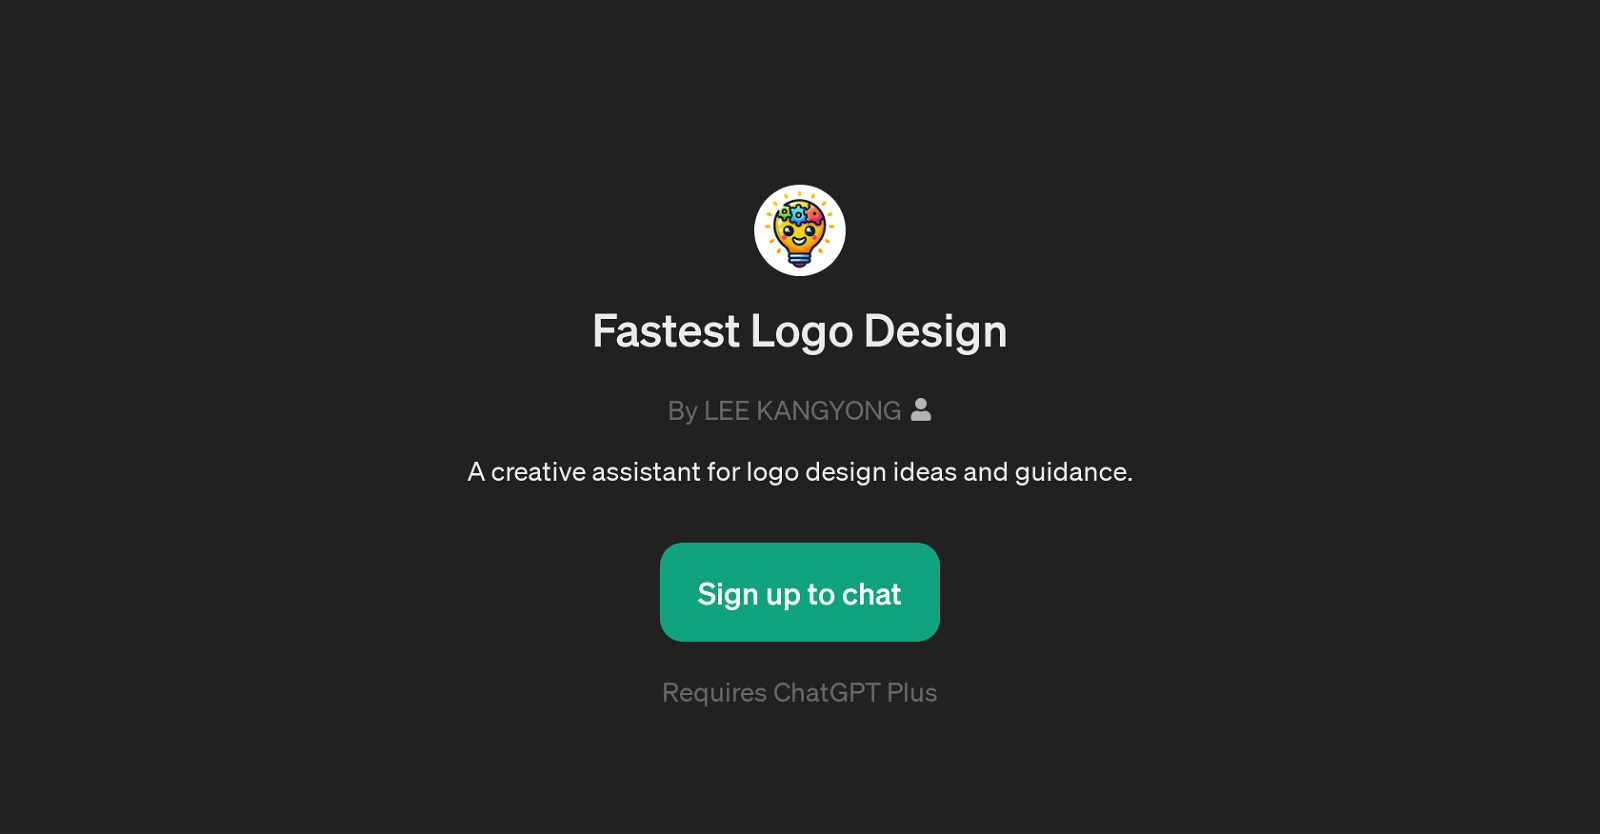 Fastest Logo Design website